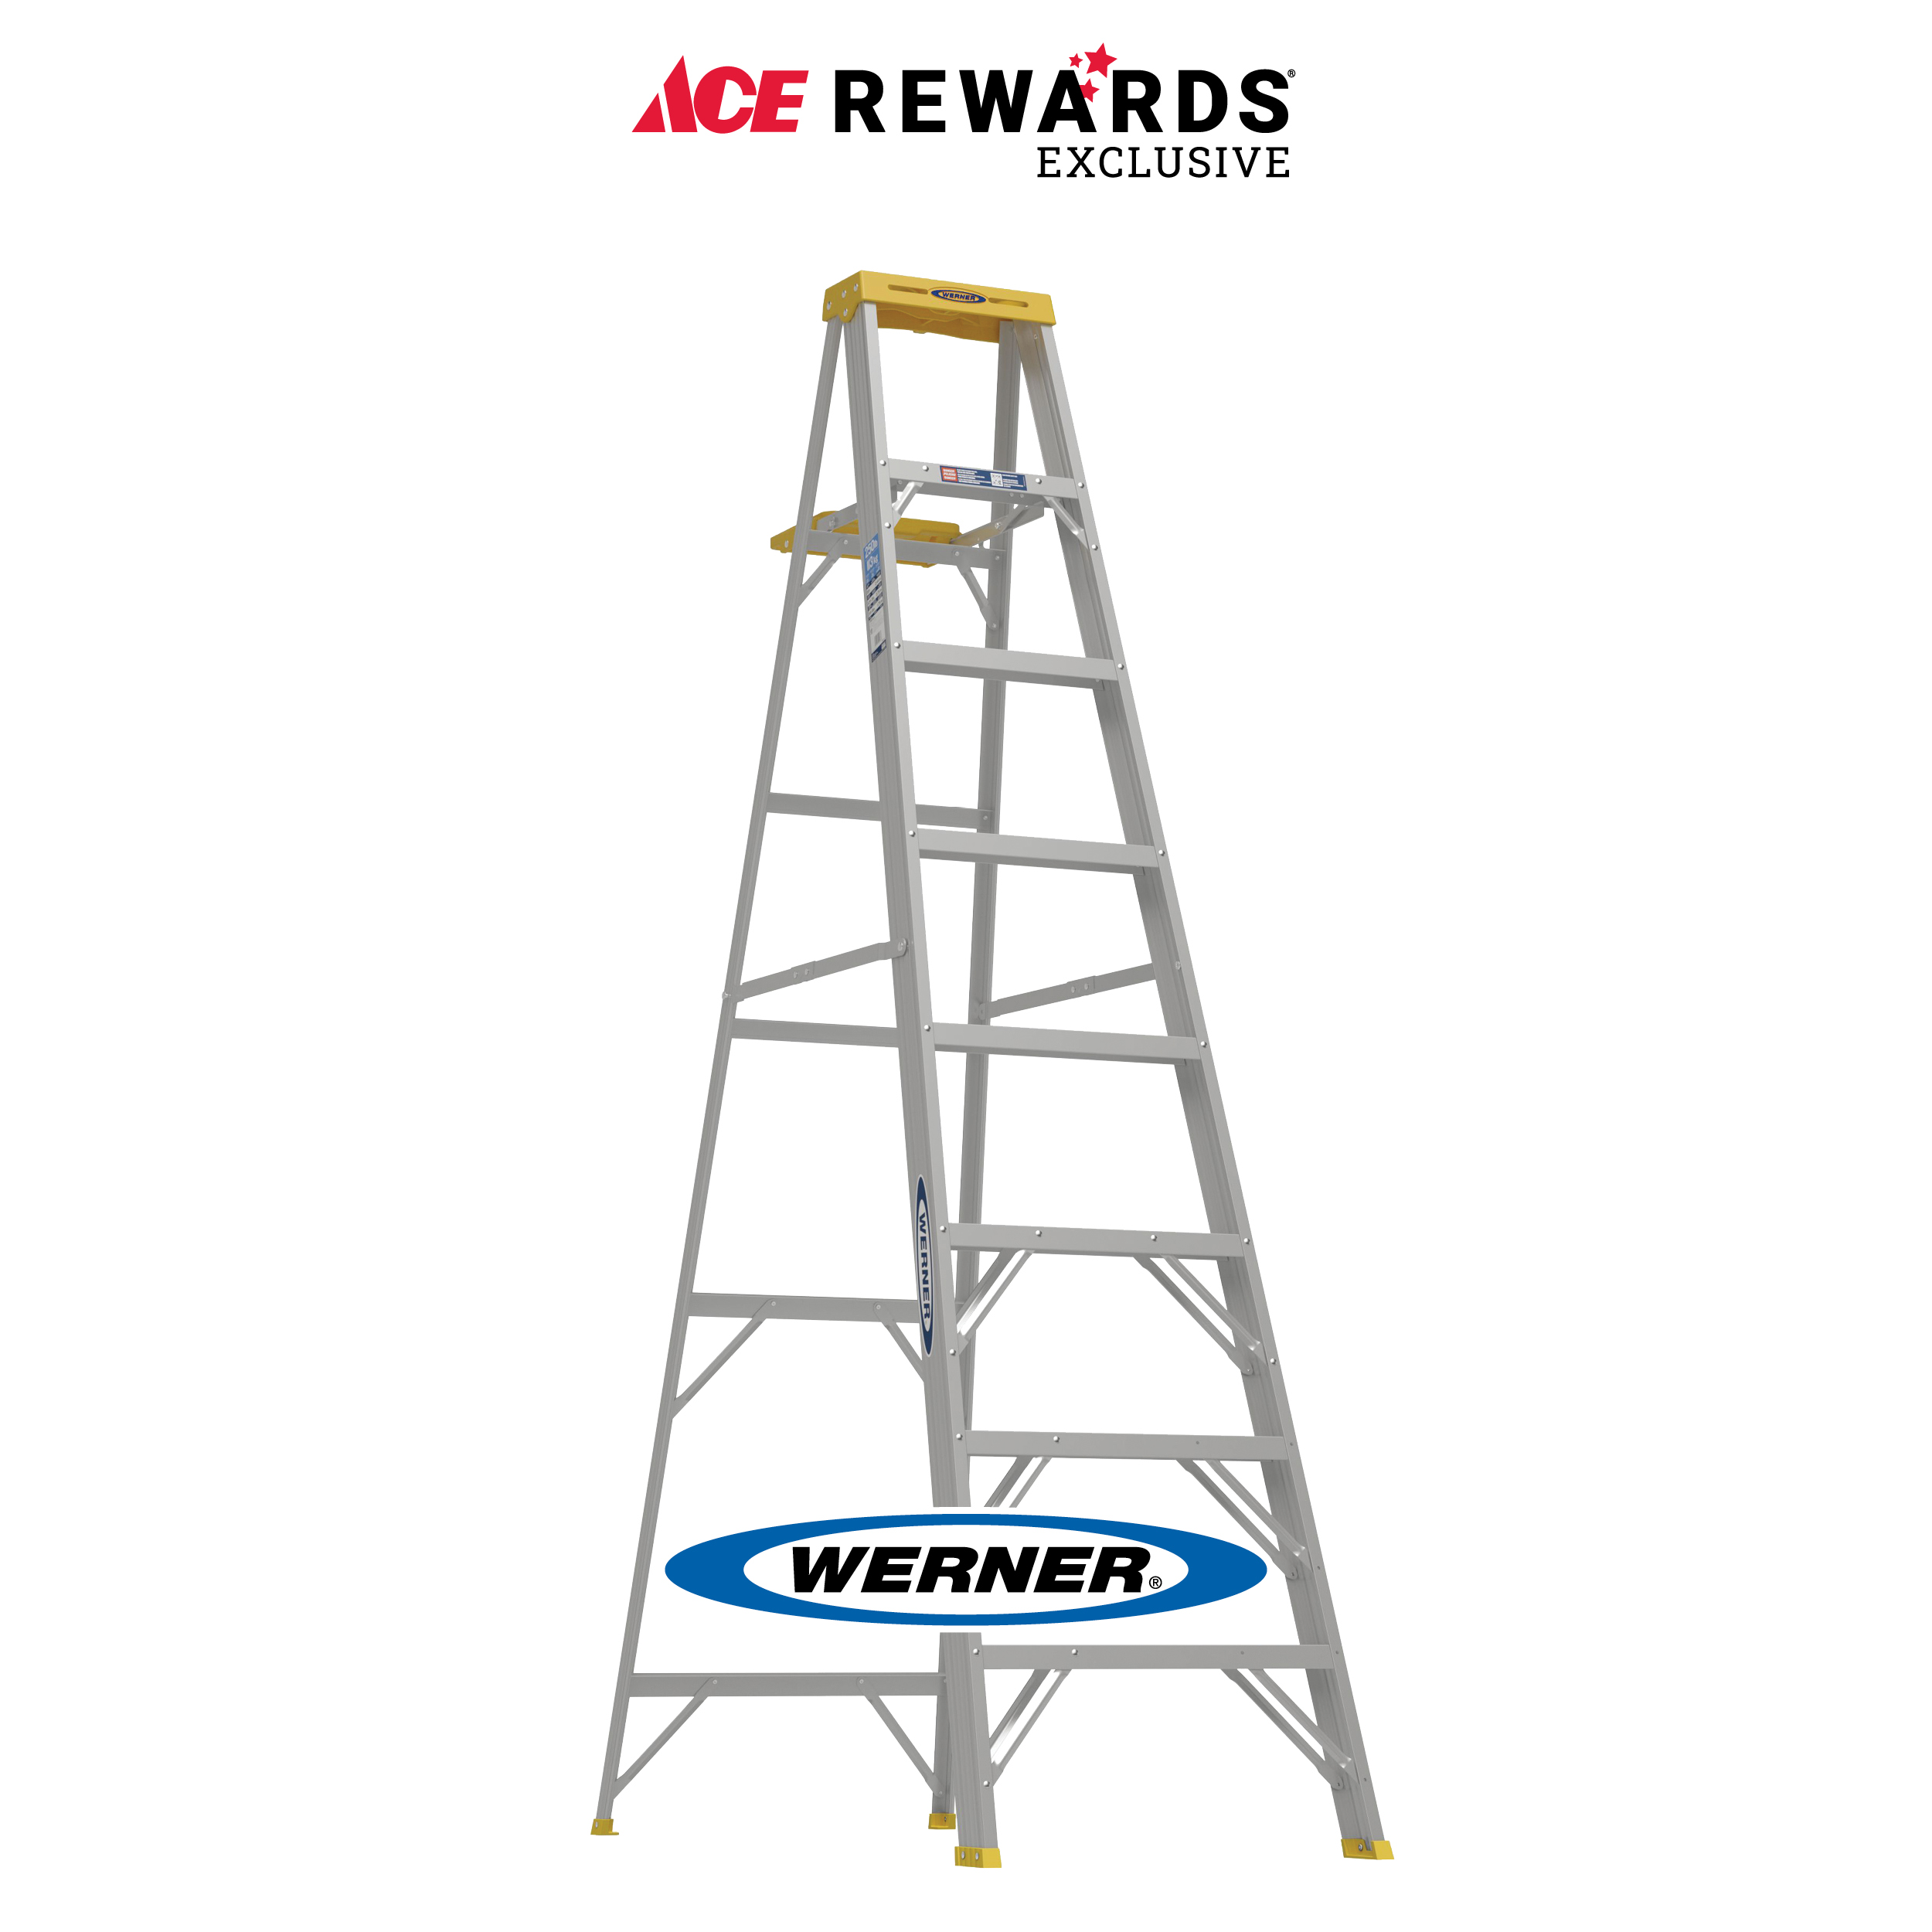 Ace Rewards Exclusive: Werner® 8" Stepladder, 250lb capacity